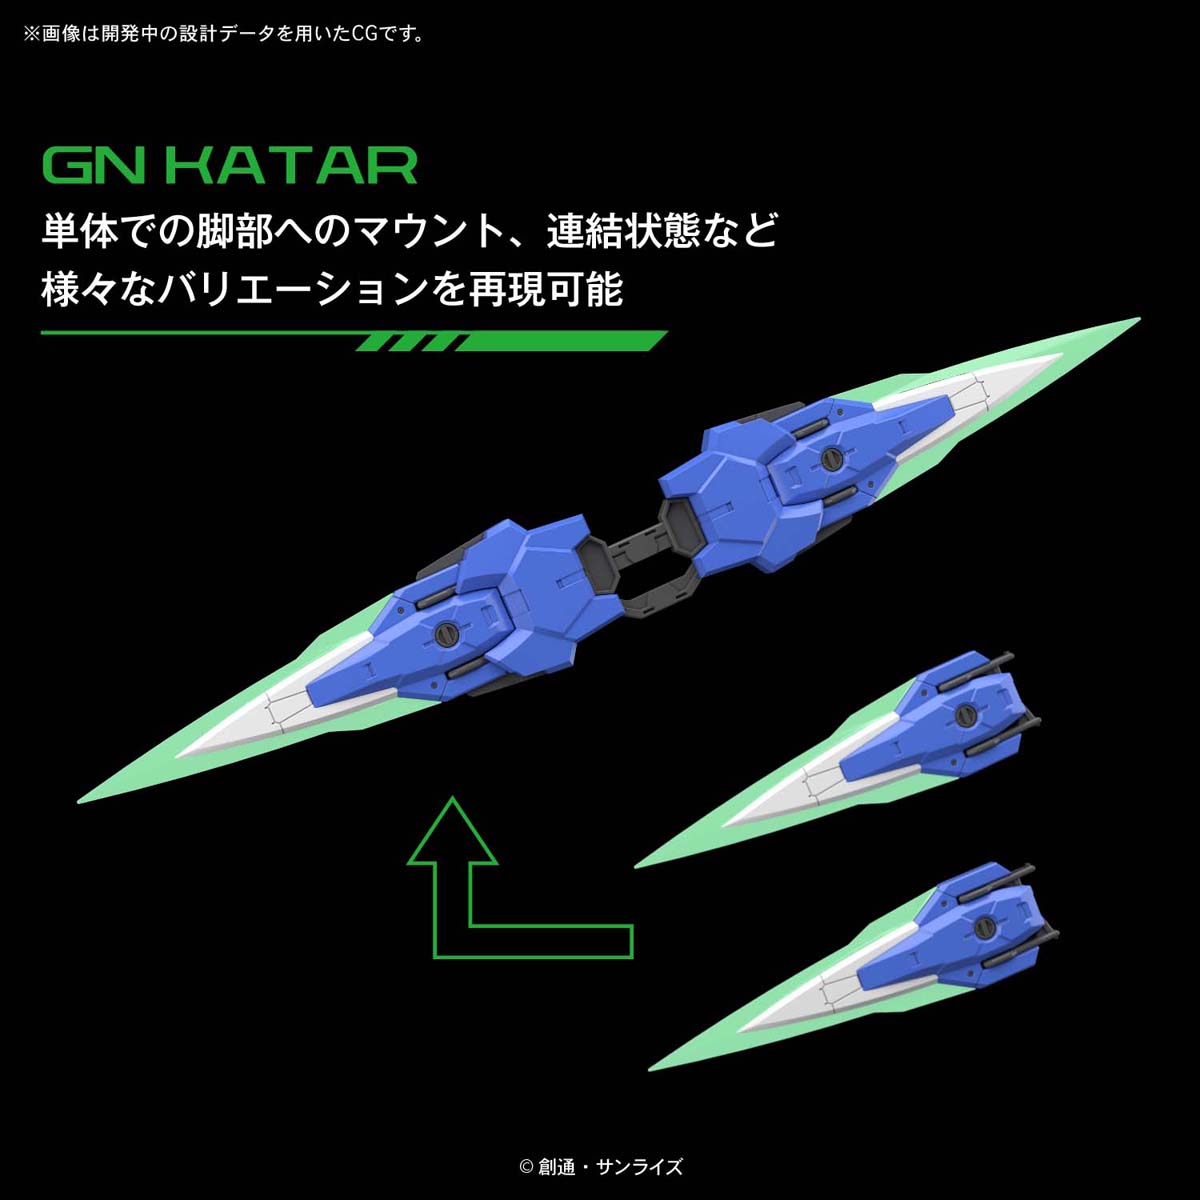 PG 1/60 00 Gundam Seven Sword/G